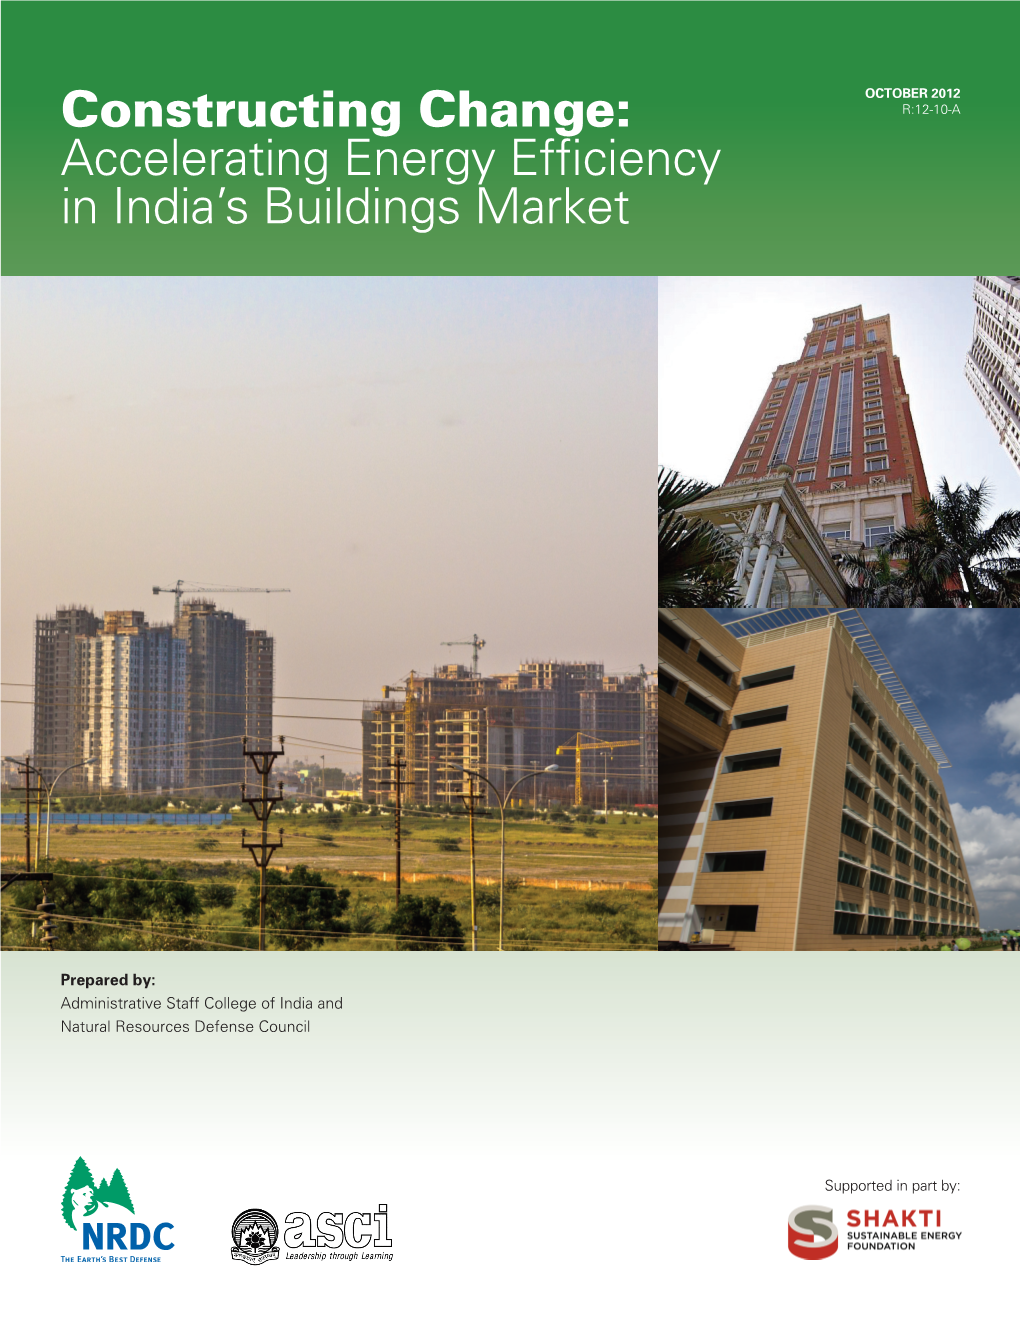 Accelerating Energy Efficiency in India's Buildings Market